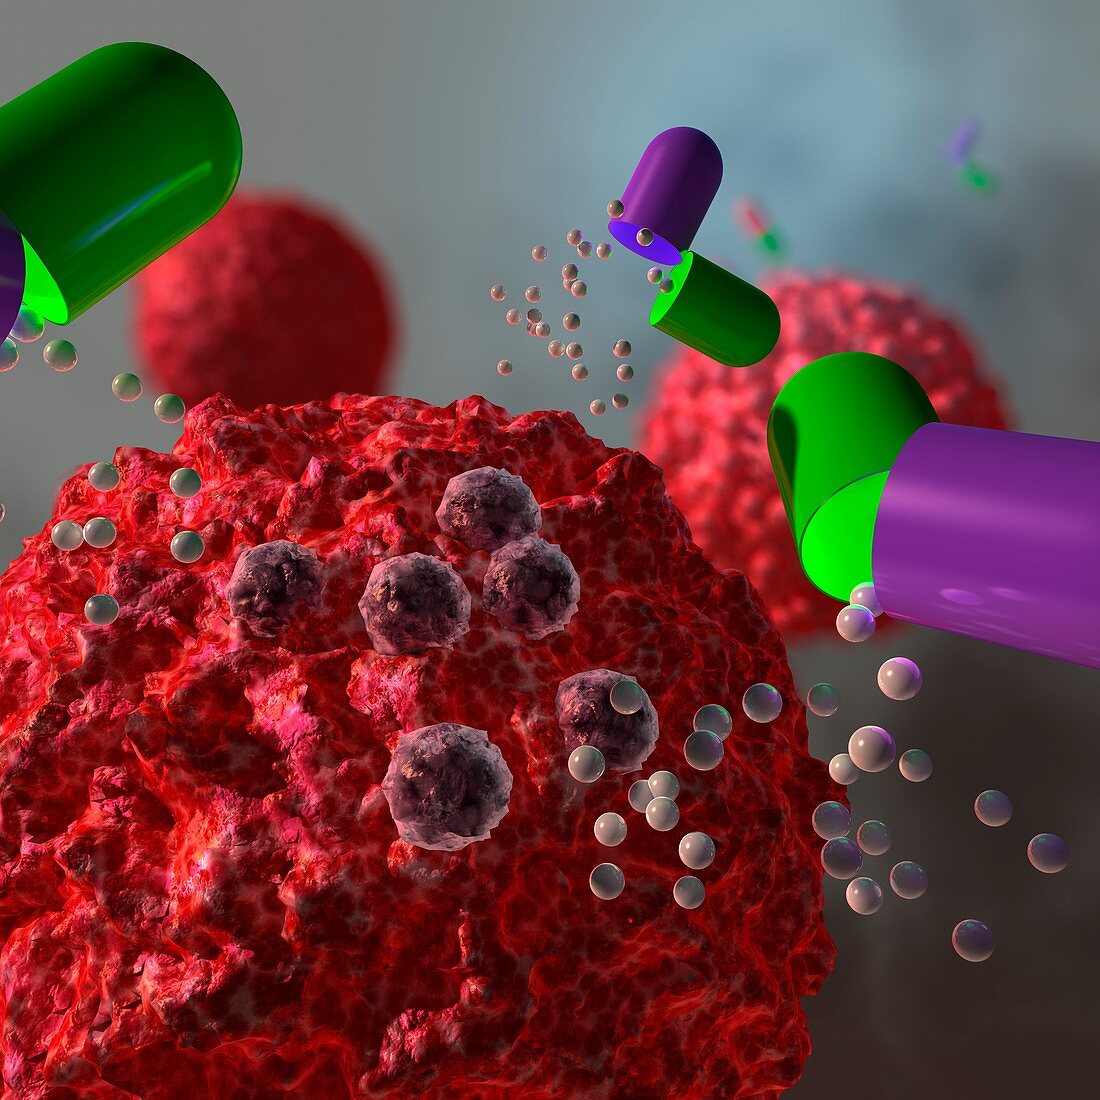 Anti-cancer nanoparticles, illustration